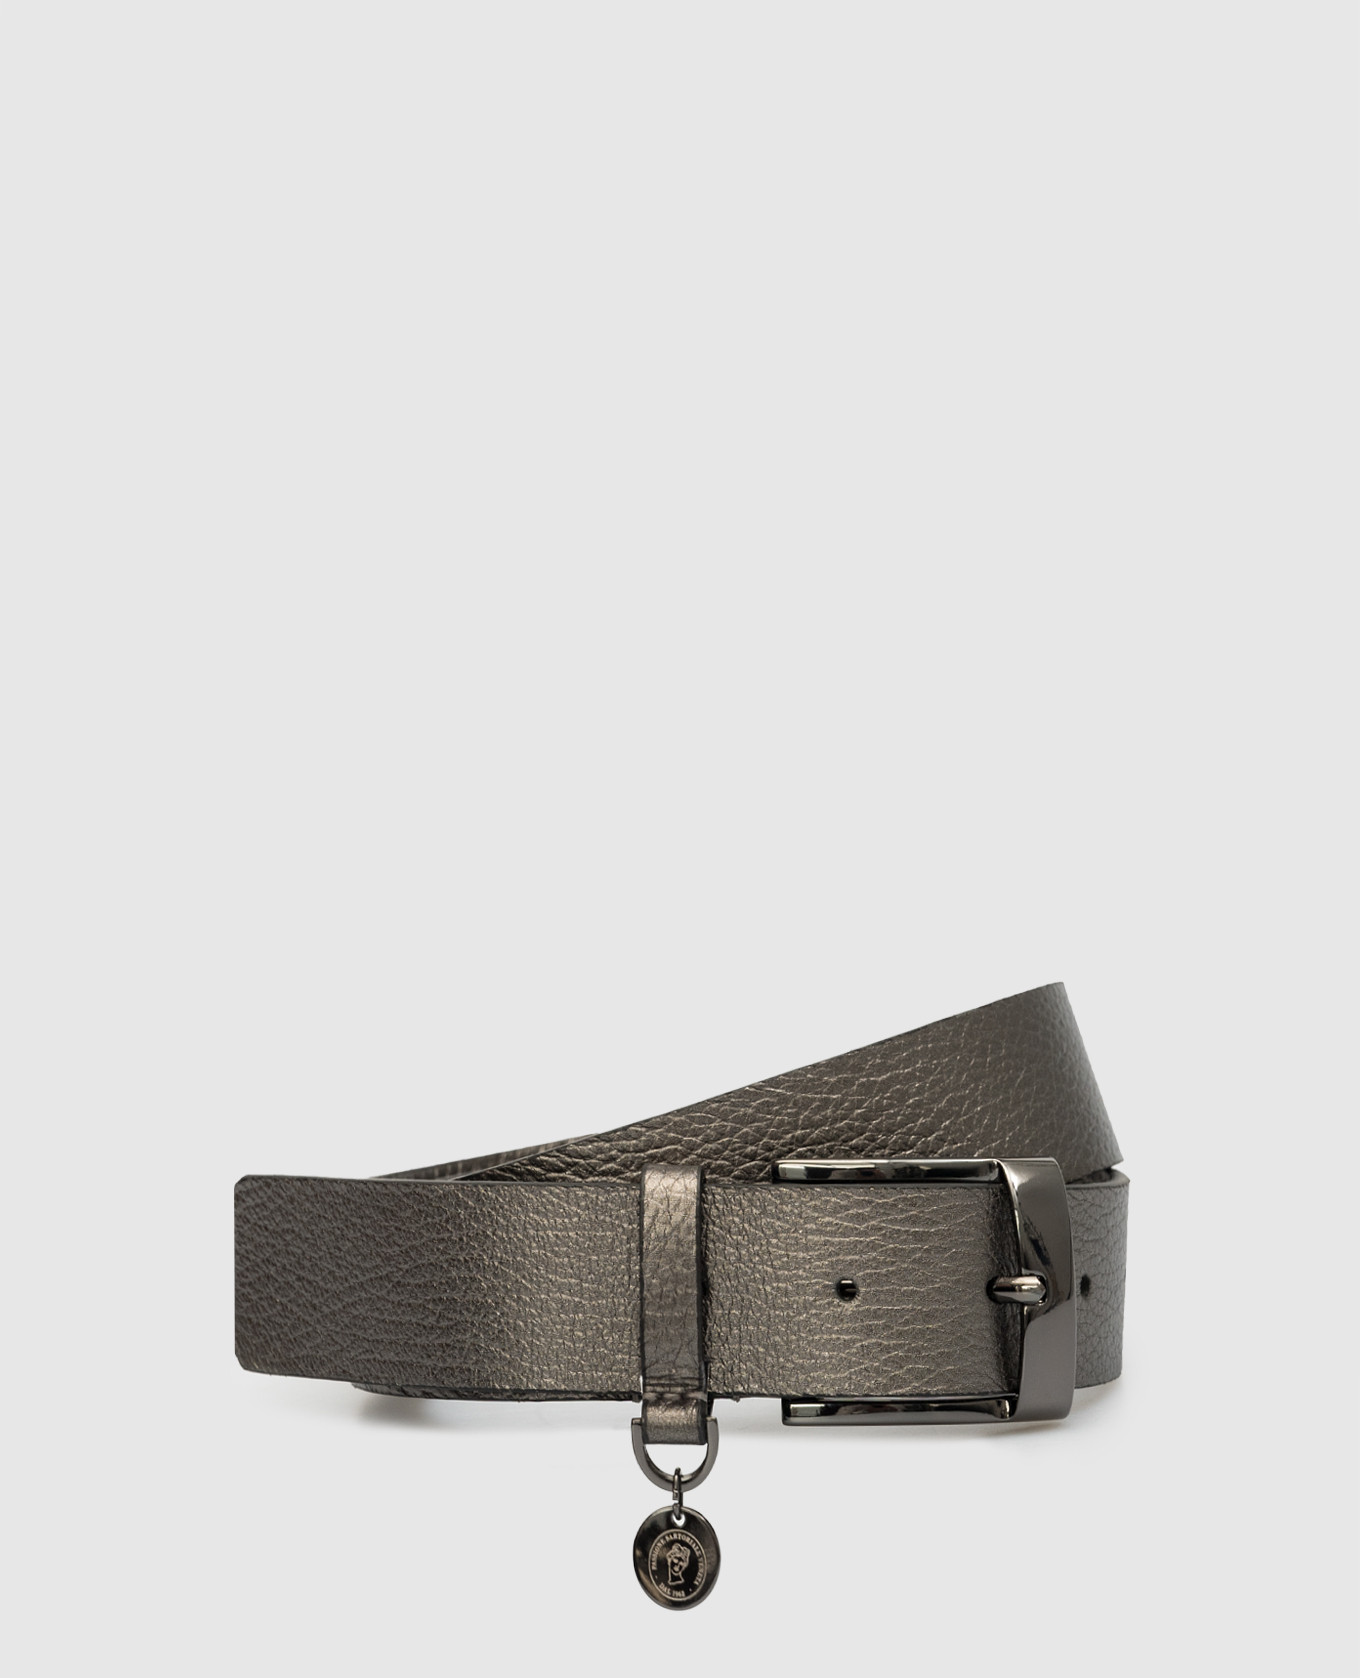 Silver leather belt